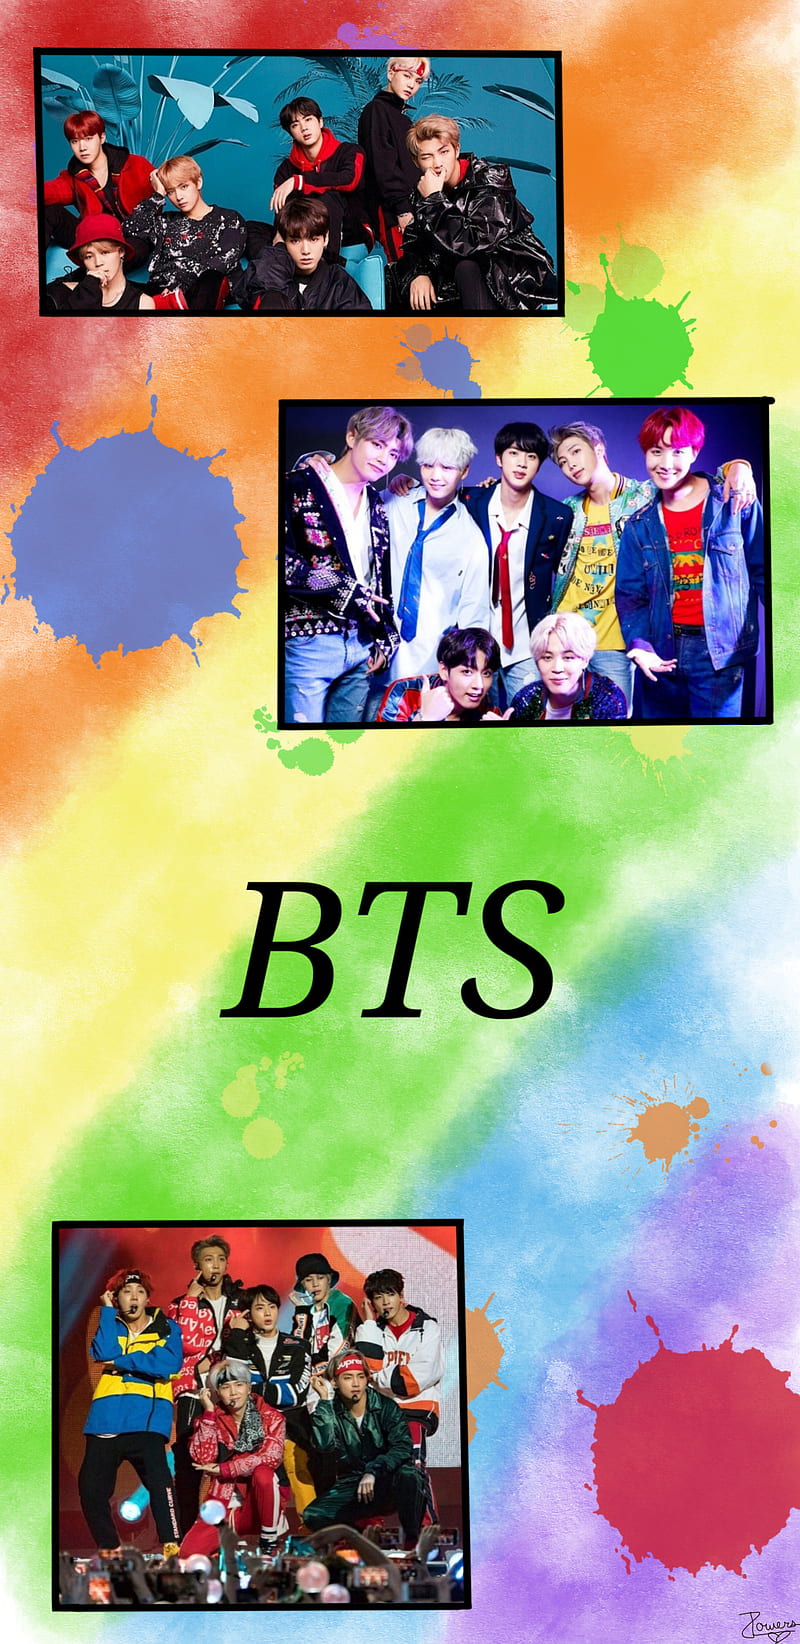 BTS Poster KPOP Jungkook Suga J-Hope V Jin Jimin RM Bangtan Boys Collage  Photos